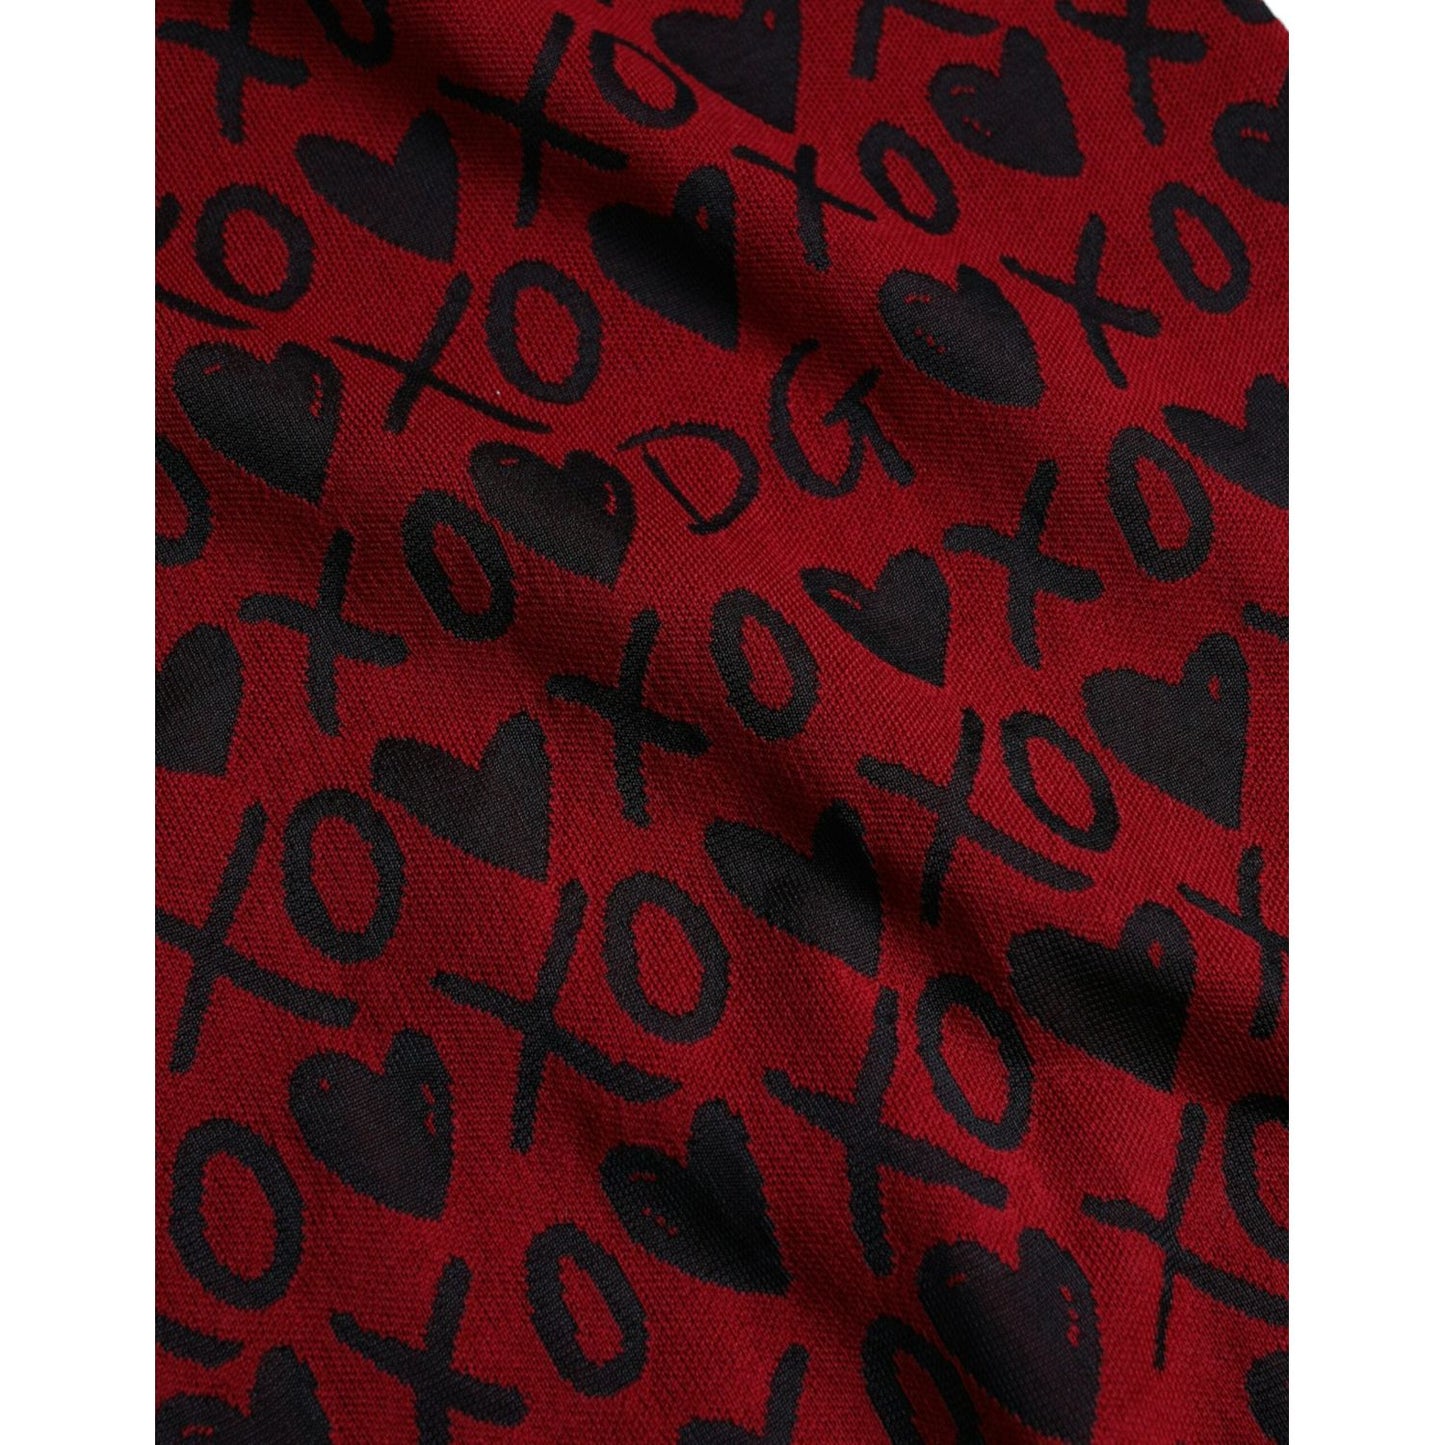 Dolce & Gabbana Red Black XOXO Crew Neck Pullover Sweater red-black-xoxo-crew-neck-pullover-sweater